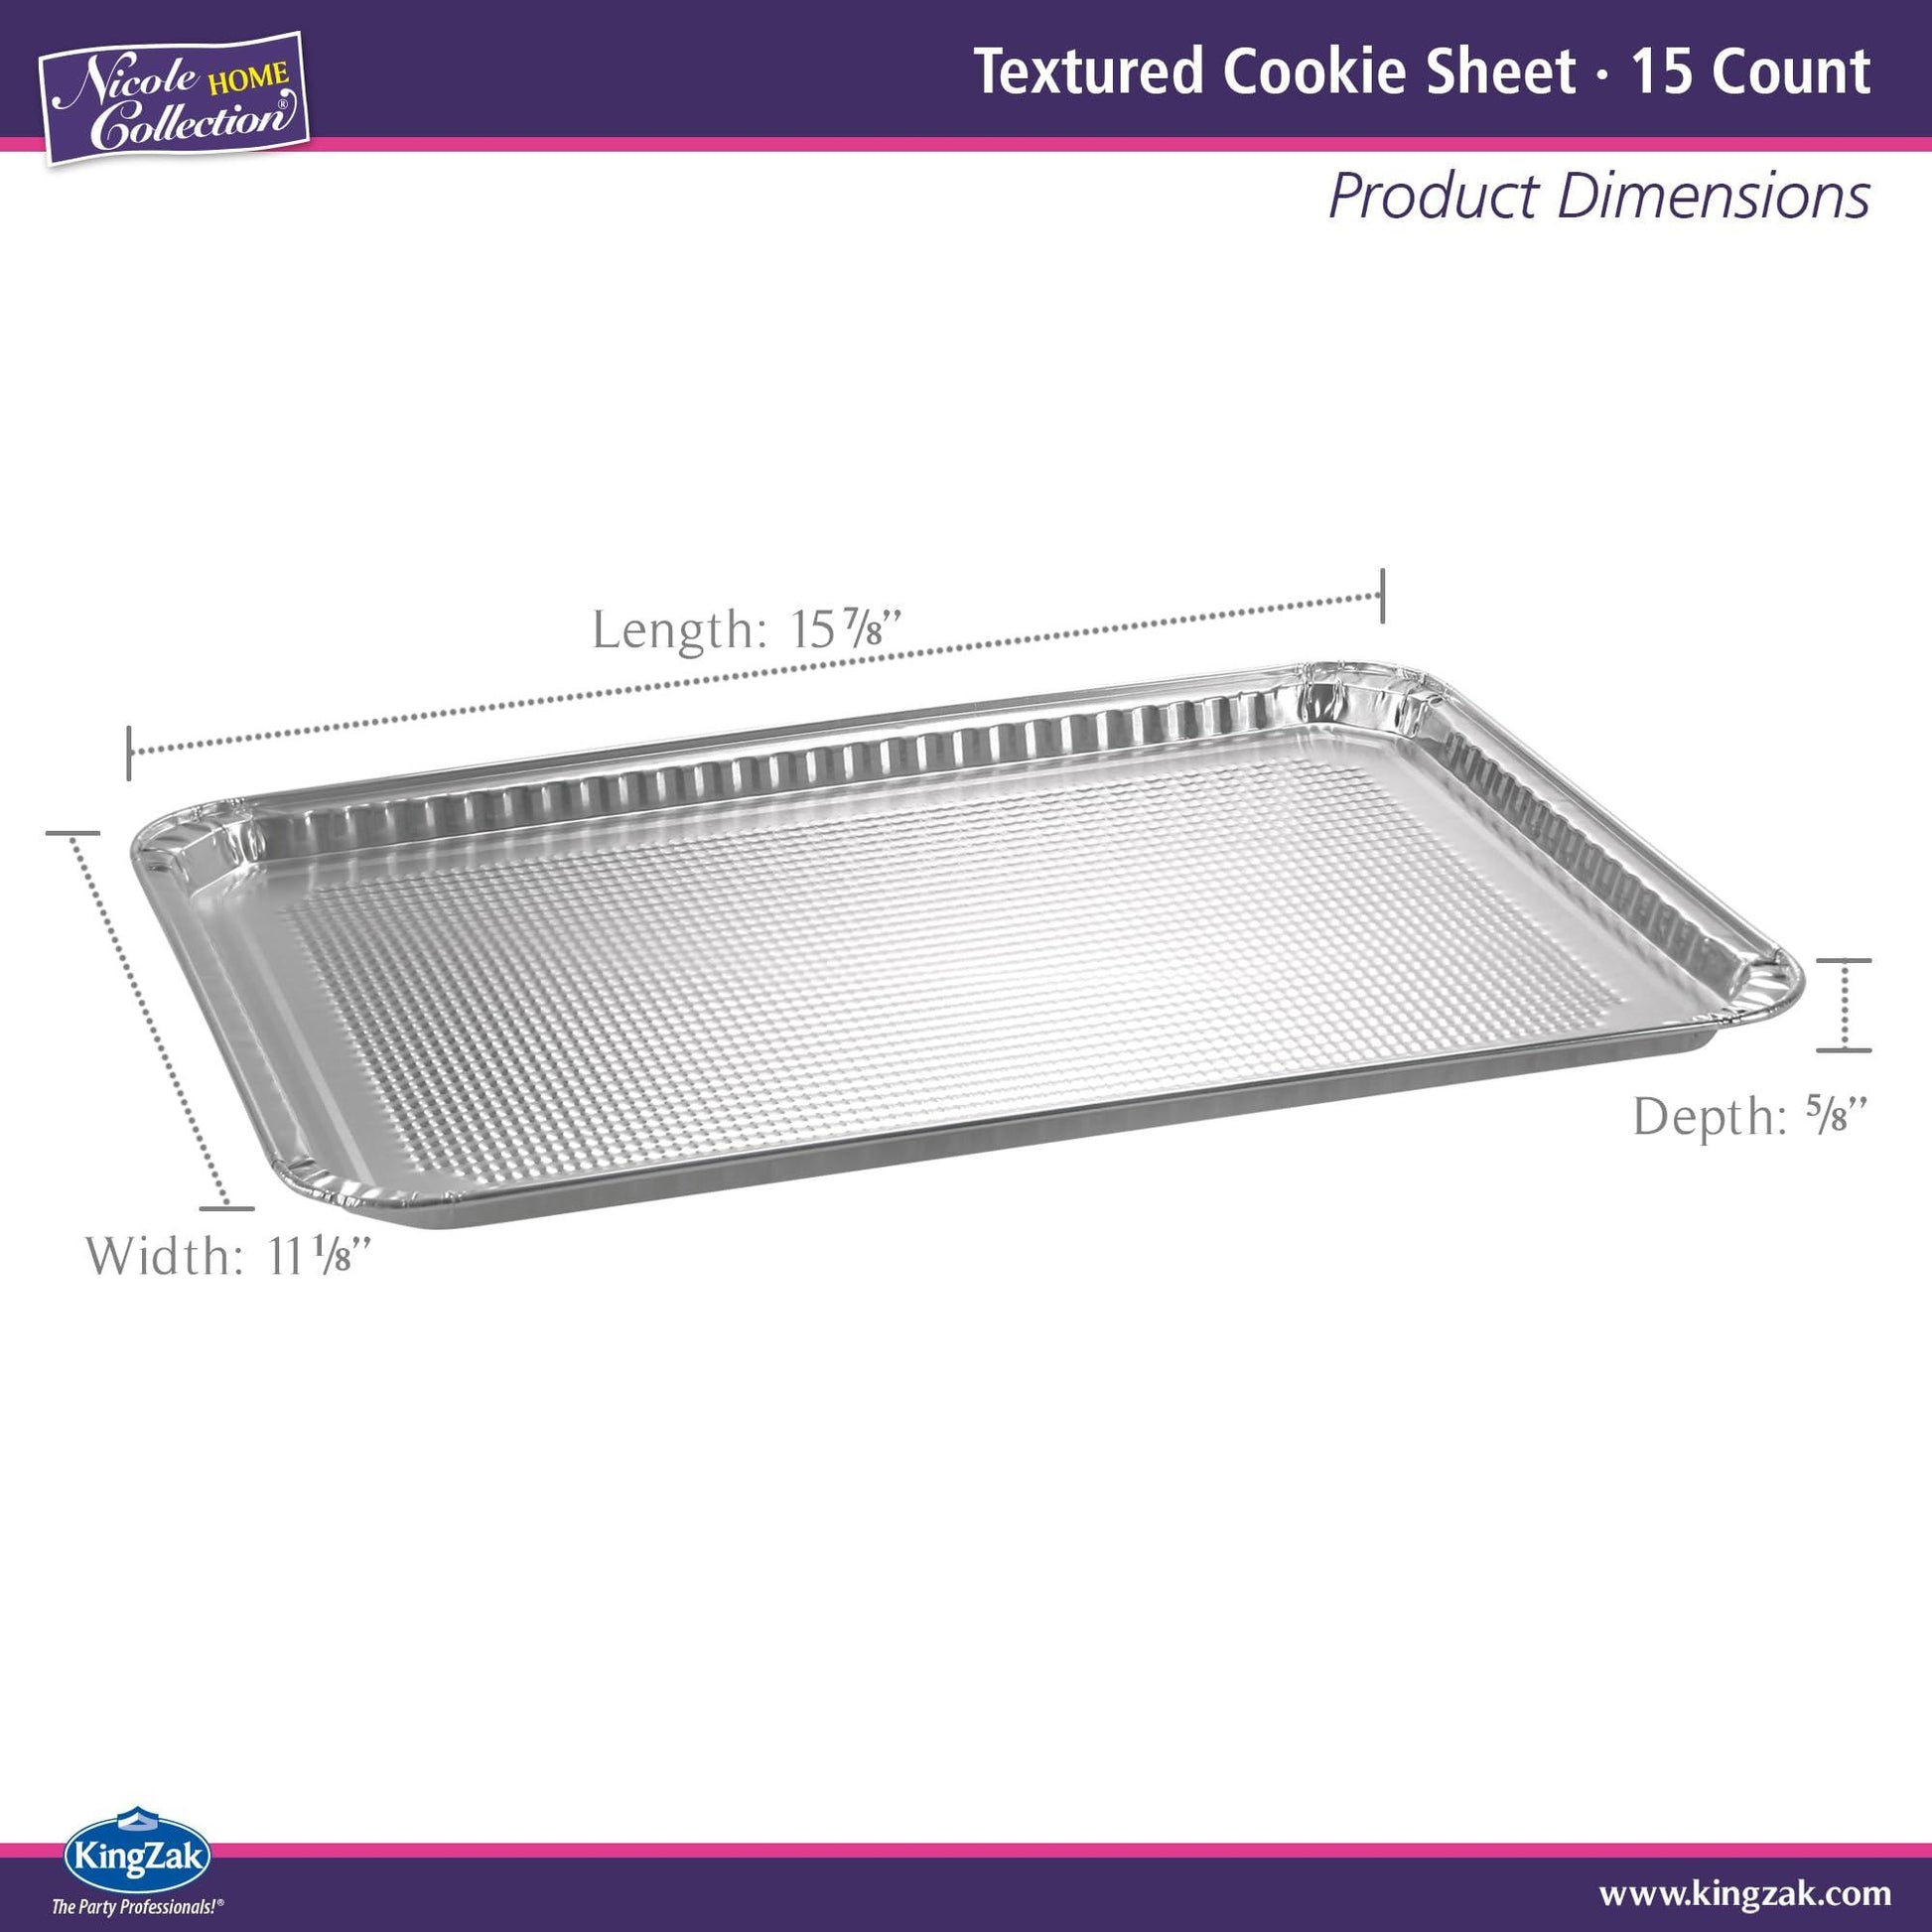 Aluminum Pans Half Size Textured Cookie Sheet 15 Count Durable Nonstick Baking Sheets 15.87" x 11" - Sheet Pan, Baking Tray, Cookie Sheets, Foil pans, Foil trays, Sheet Baking Pans - CookCave